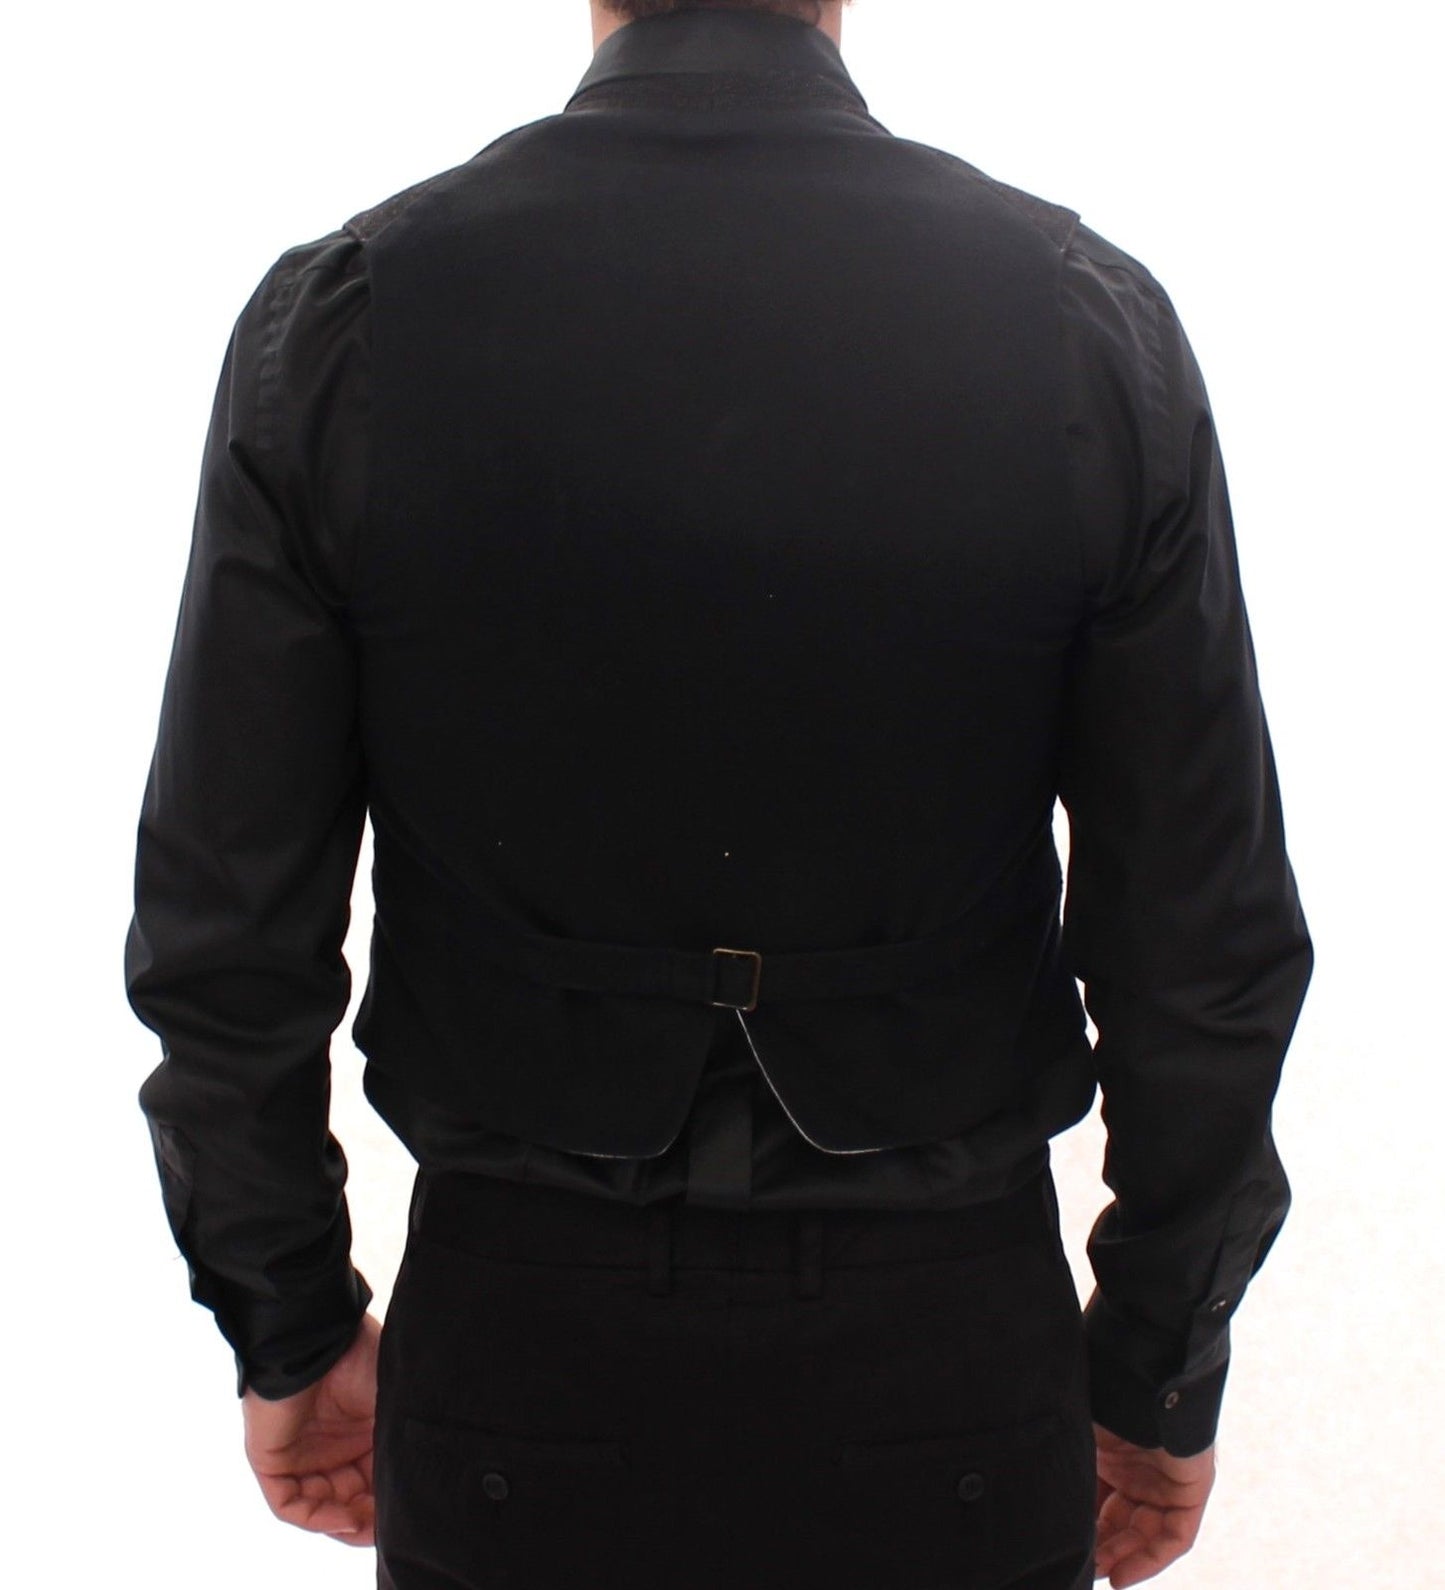 Elegant Black Dress Vest for Sophisticated Style